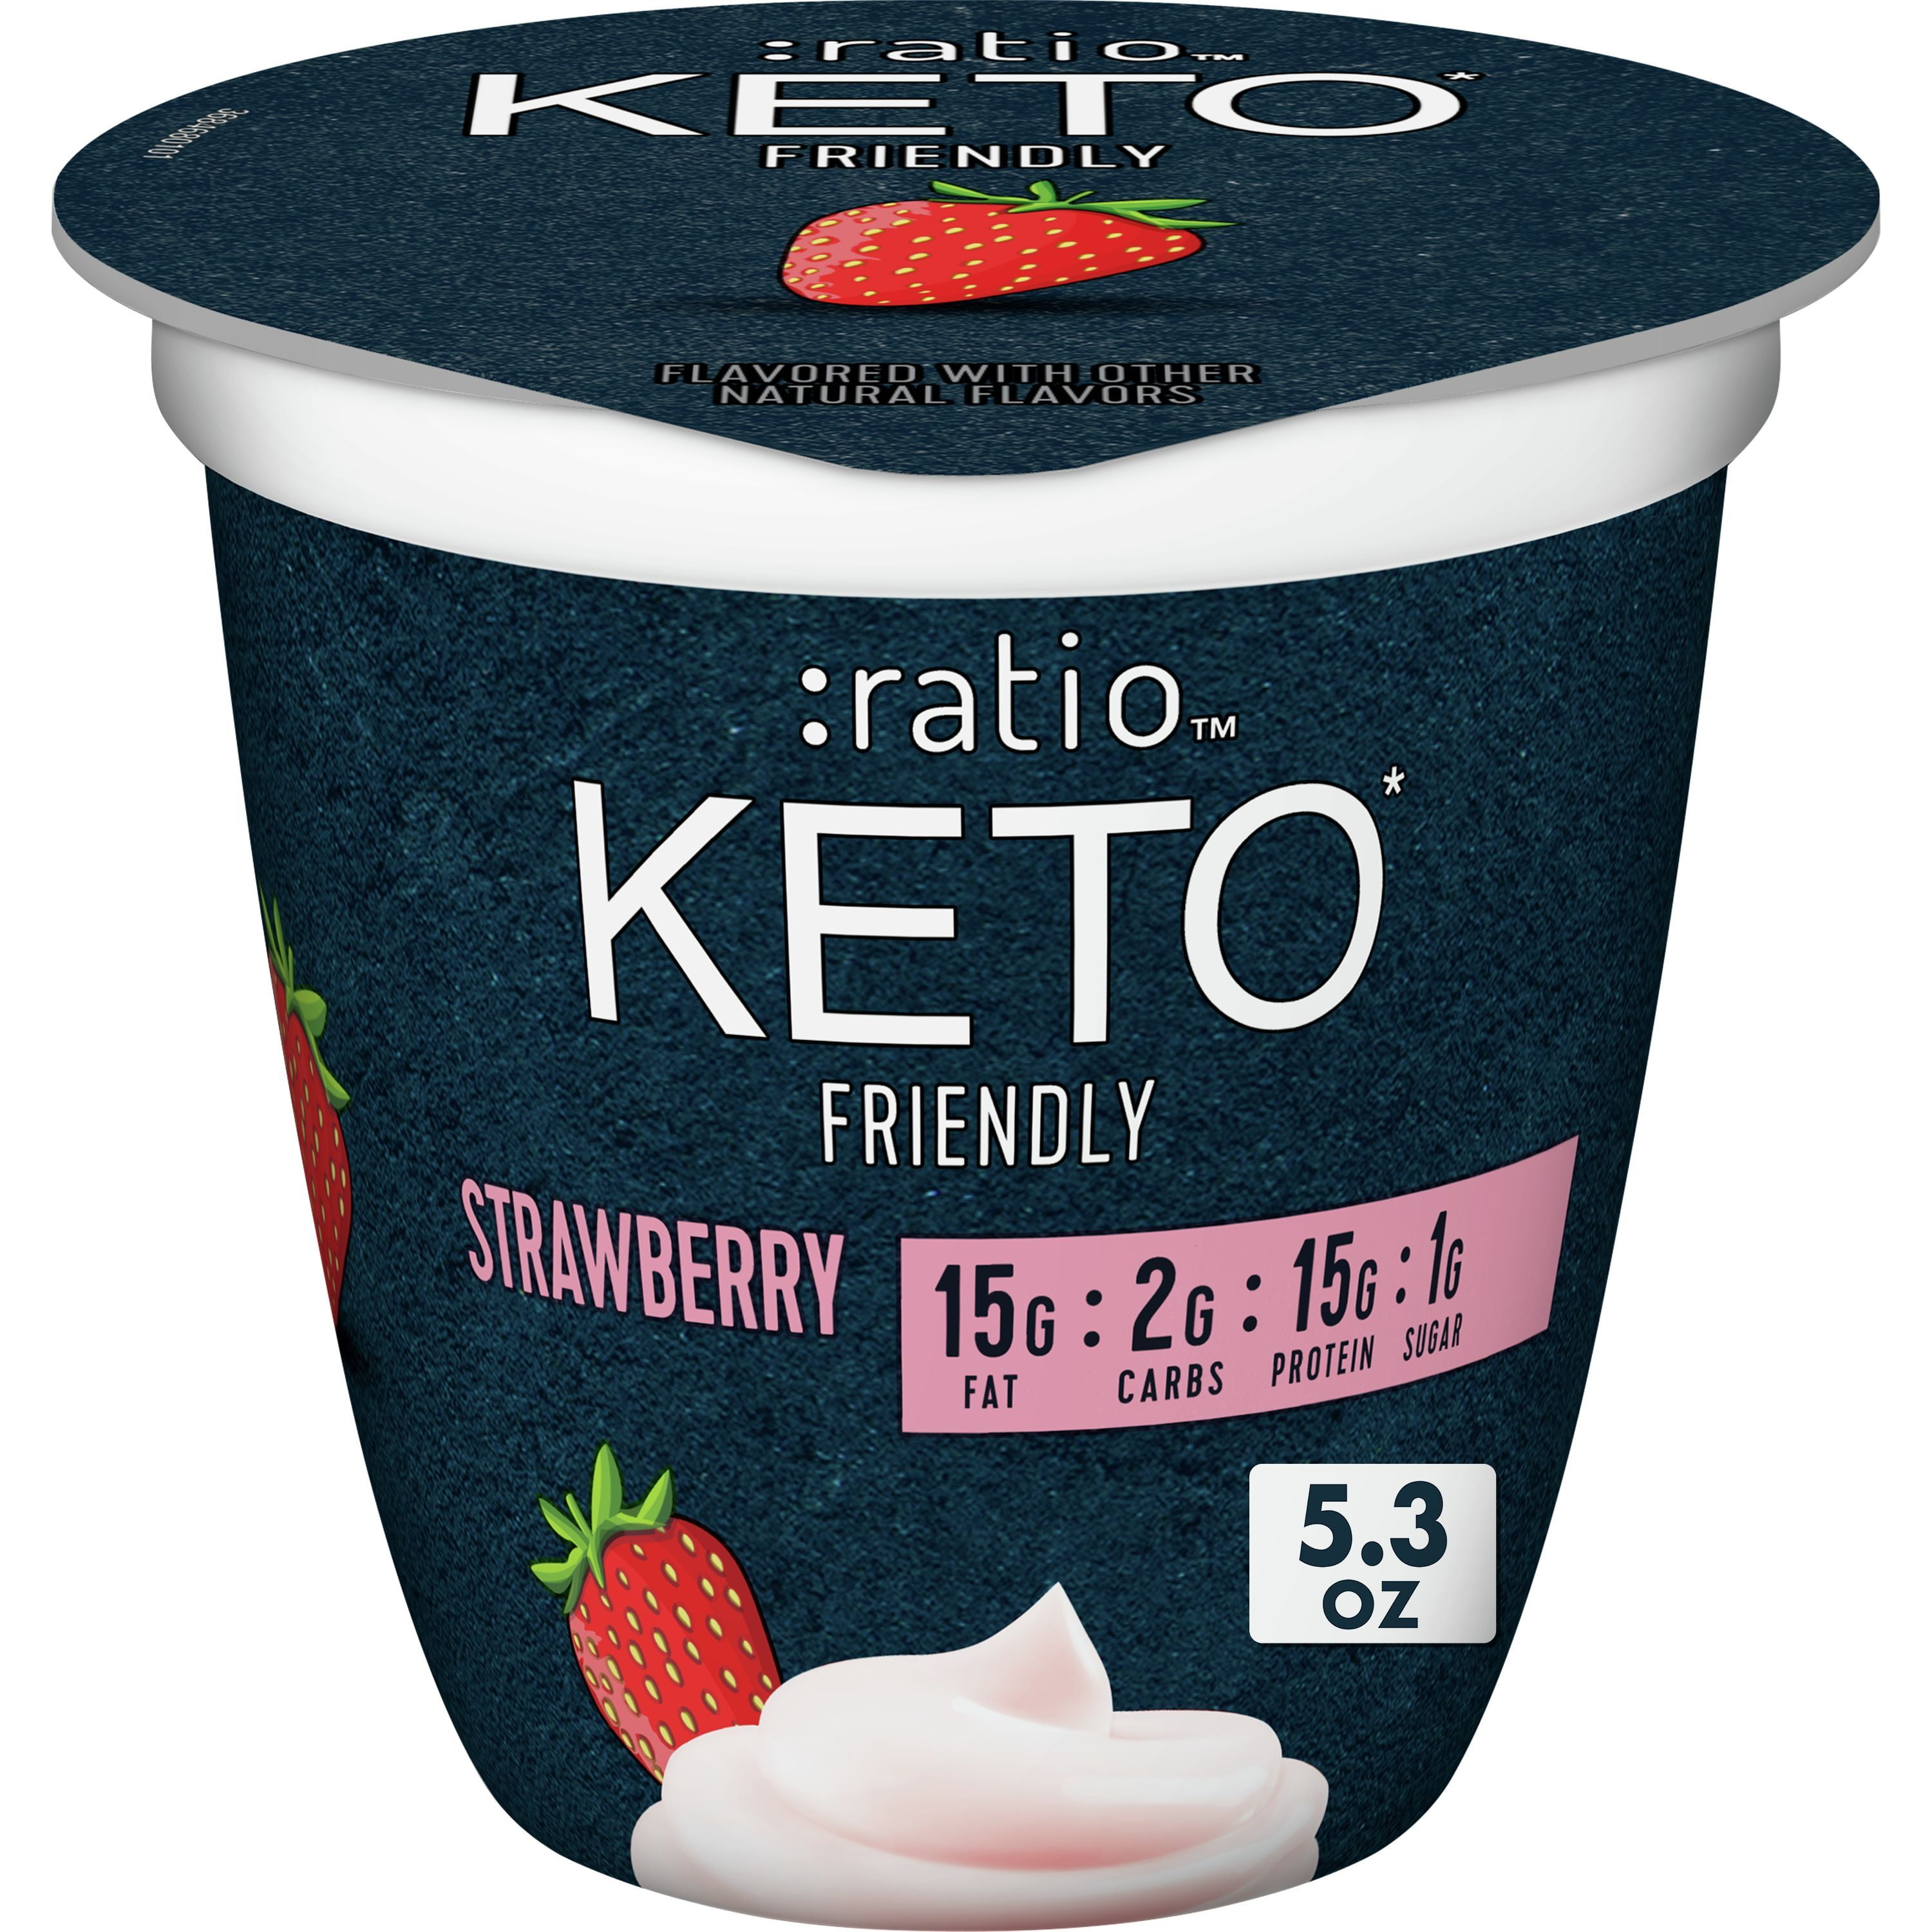 Ratio Keto Friendly Strawberry Yogurt Cultured Dairy Snack Cup, 5.3 OZ